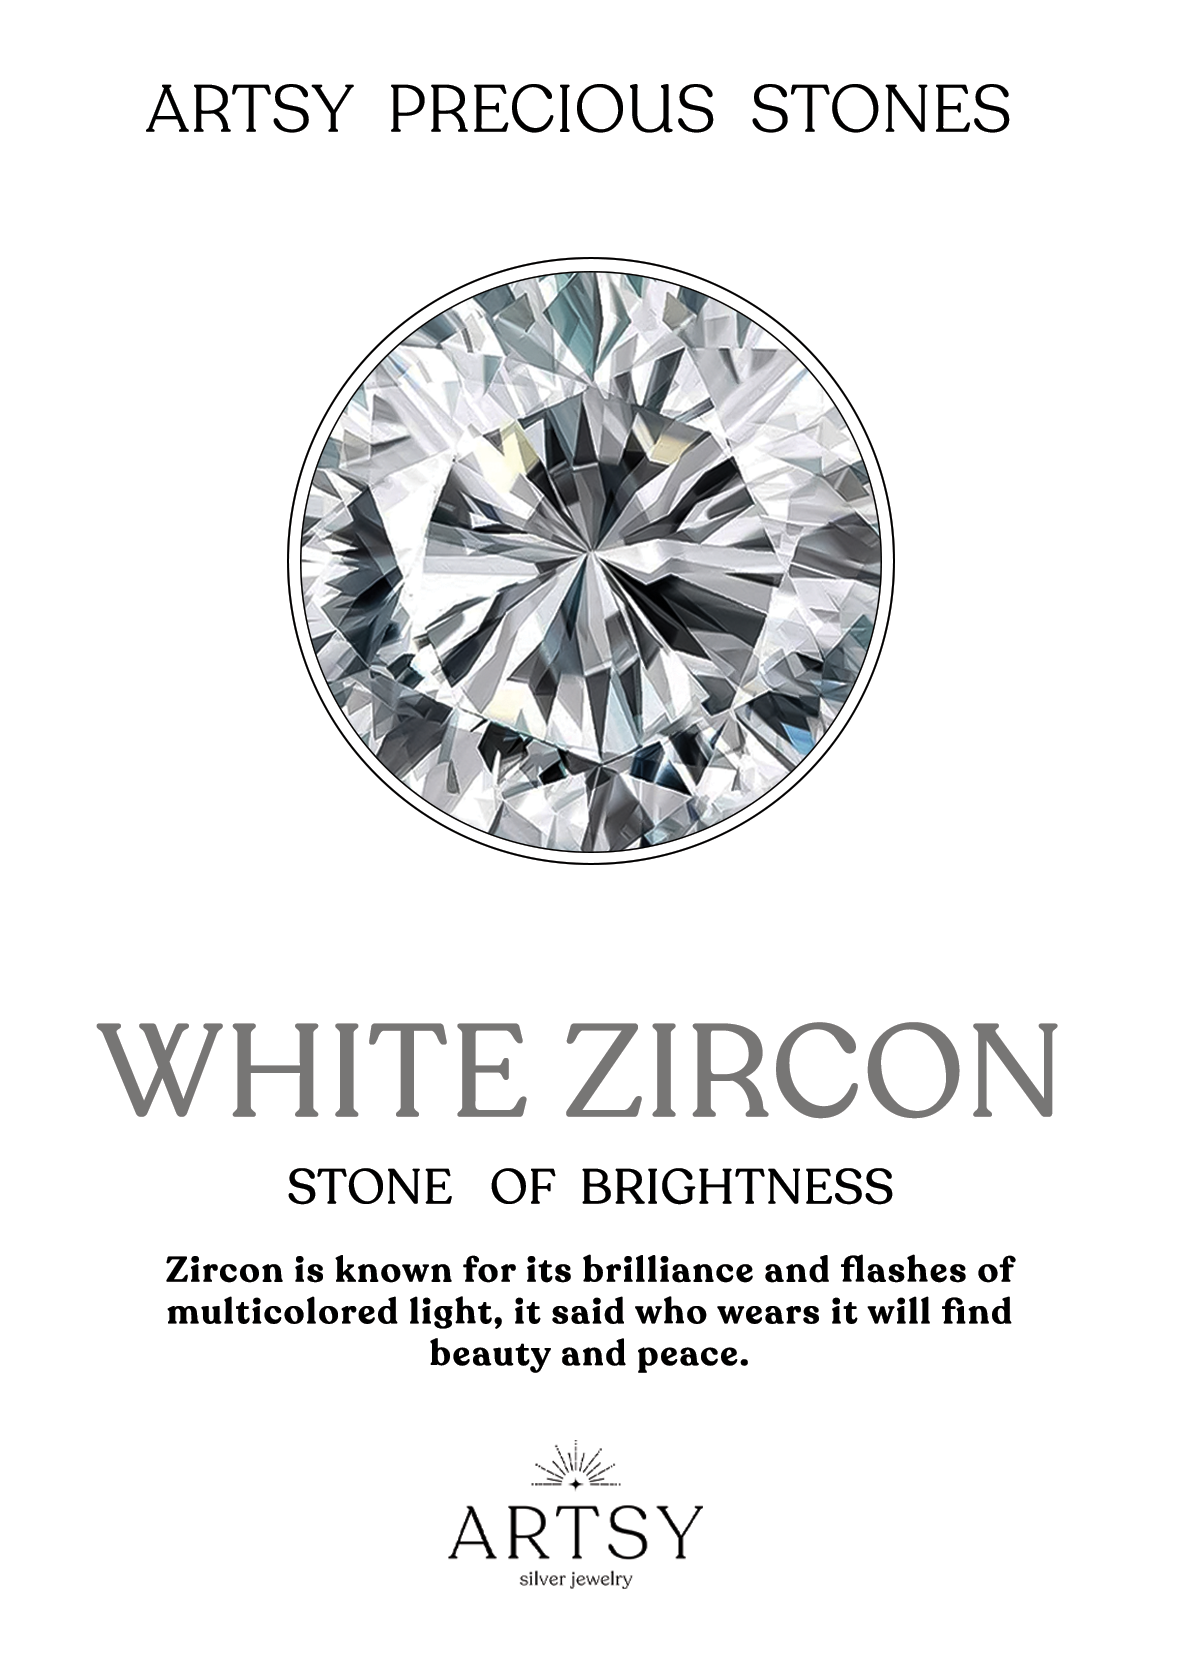 8mm Round White Zircon Stone Earrings